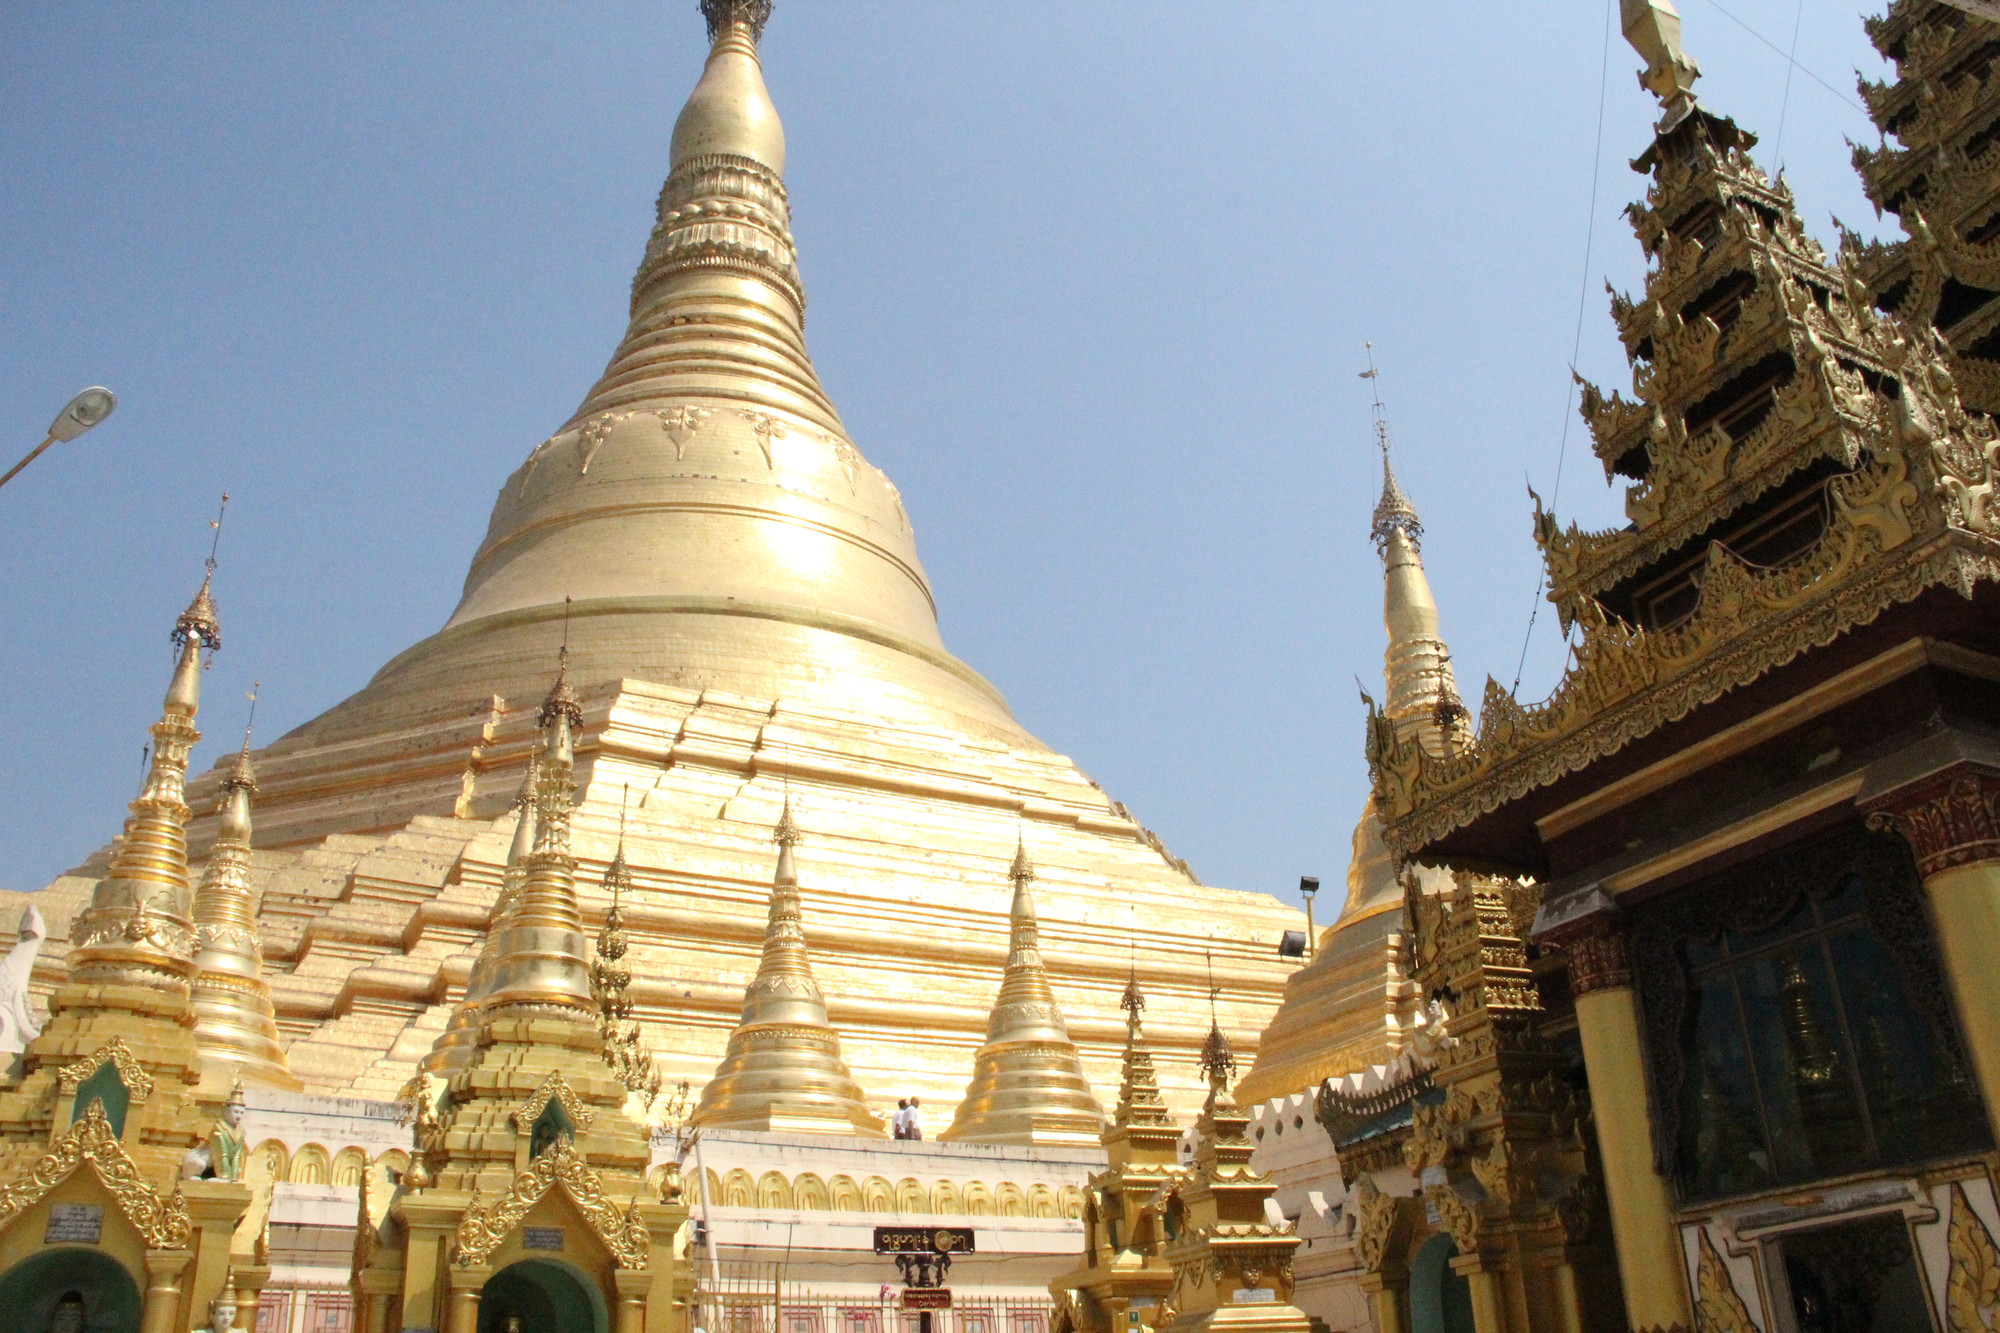 Rooftops of a temple in Myanmar